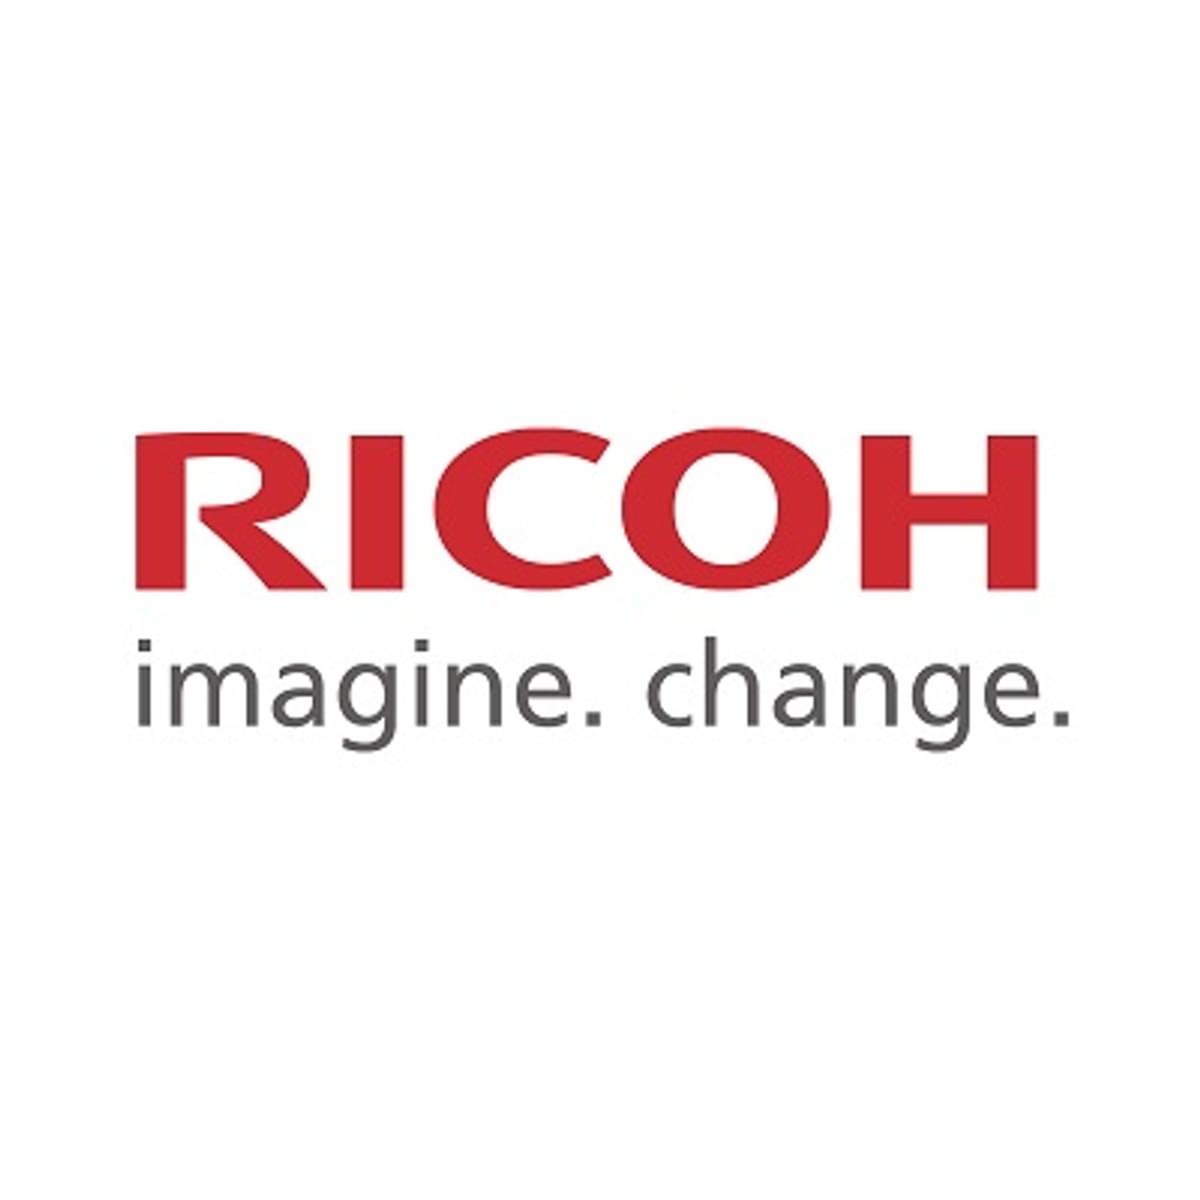 Ricoh beheert nu ook AV op afstand image